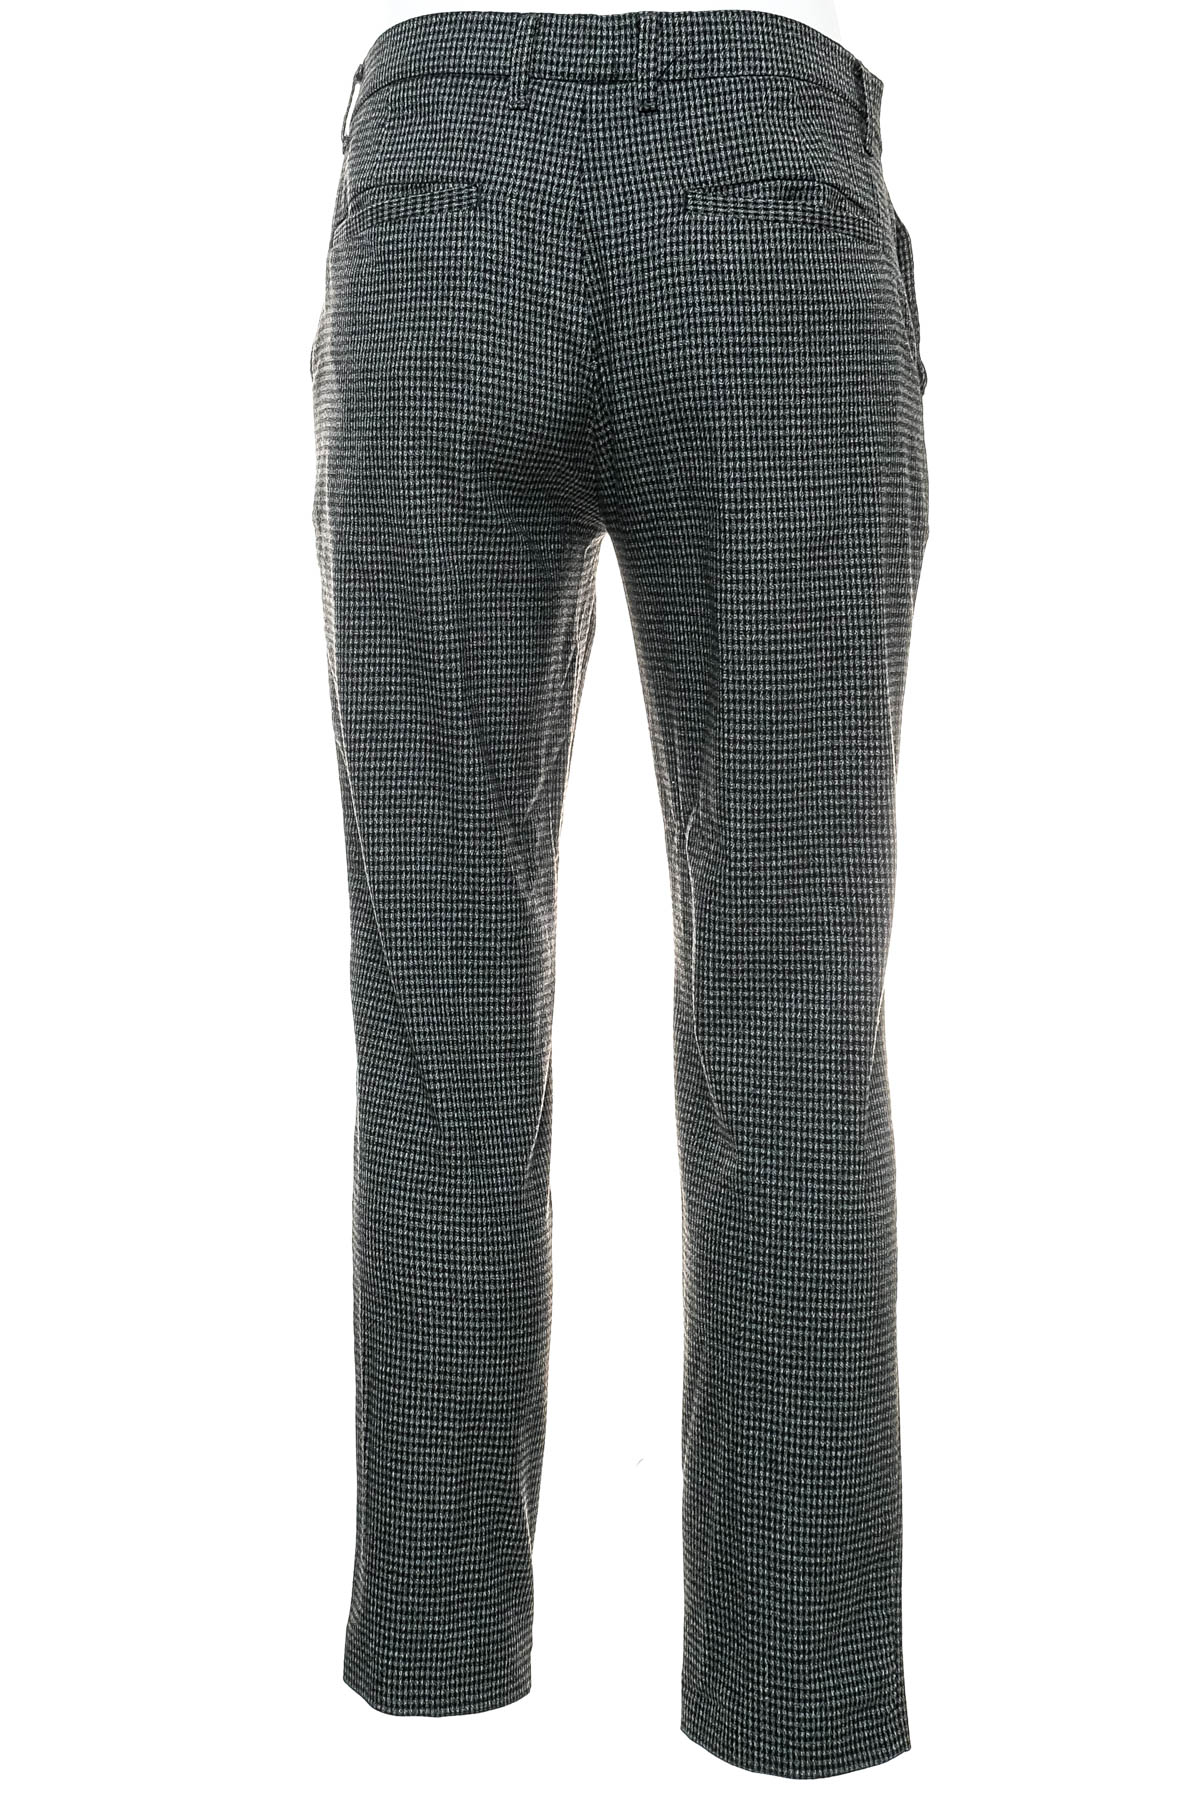 Pantalon pentru bărbați - Bershka - 1